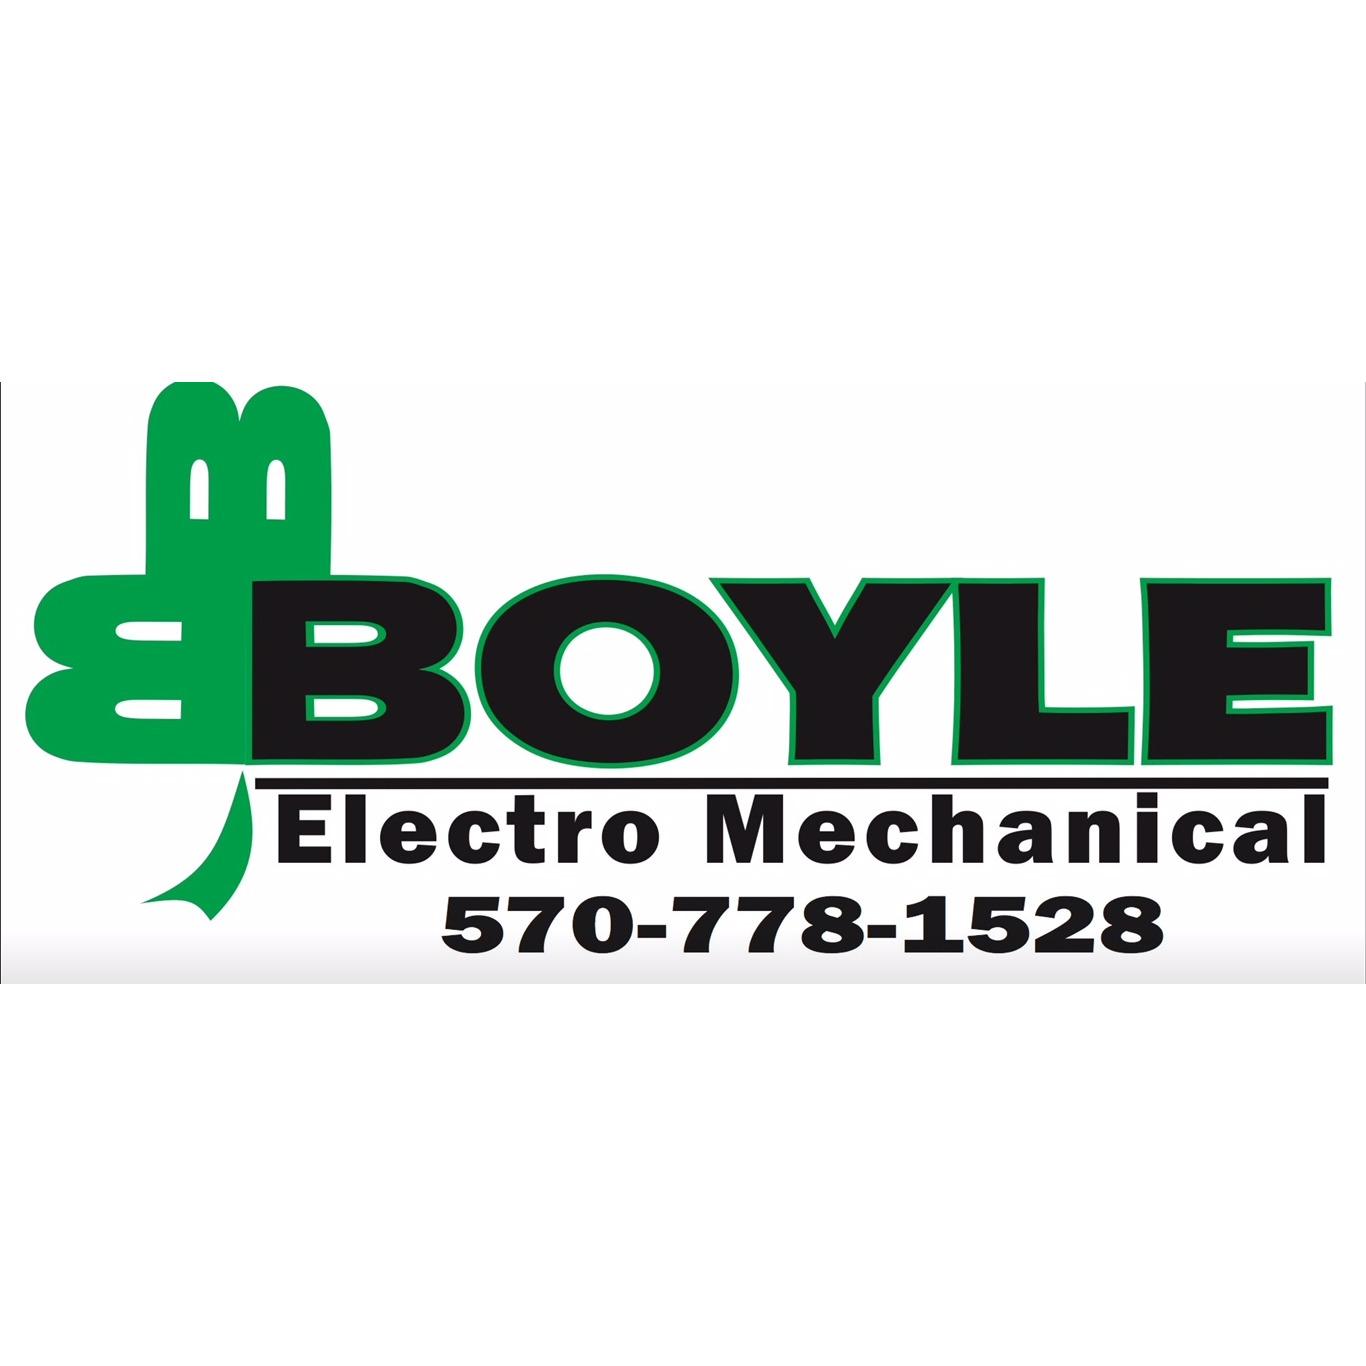 Boyle Electro Mechanical - Coaldale, PA - (570)778-1528 | ShowMeLocal.com